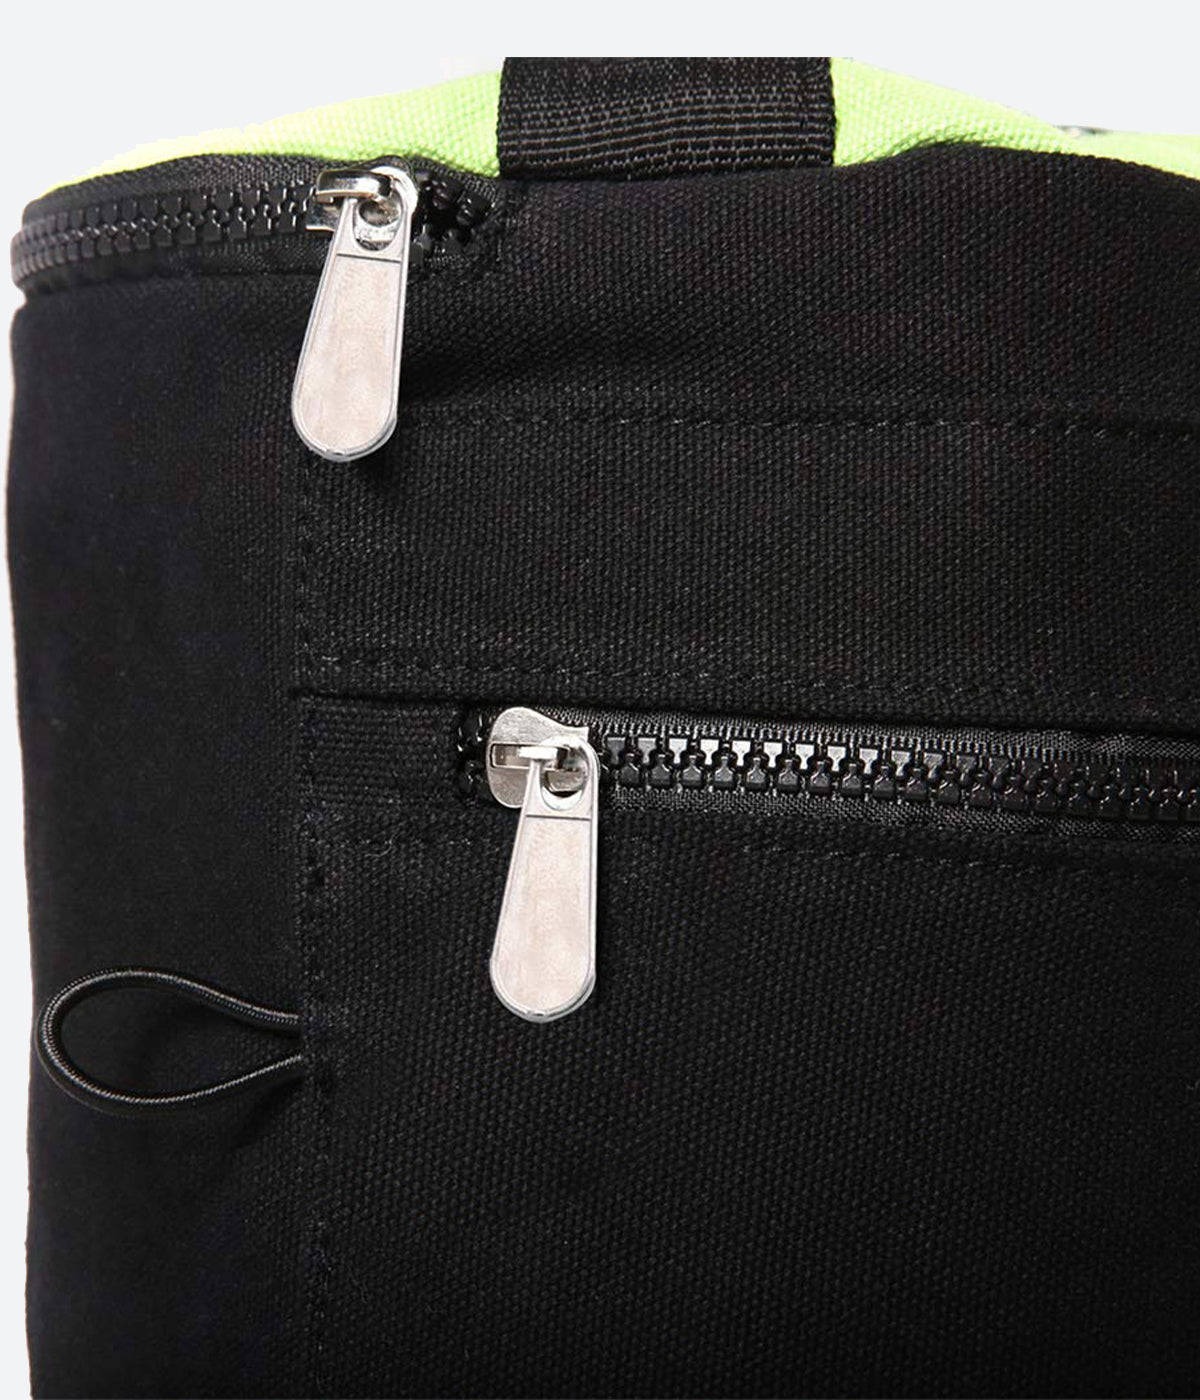 Fremous Yoga Mat Bag,Full-Zip Exercise Yoga Mat Carry Bag For Women And Men